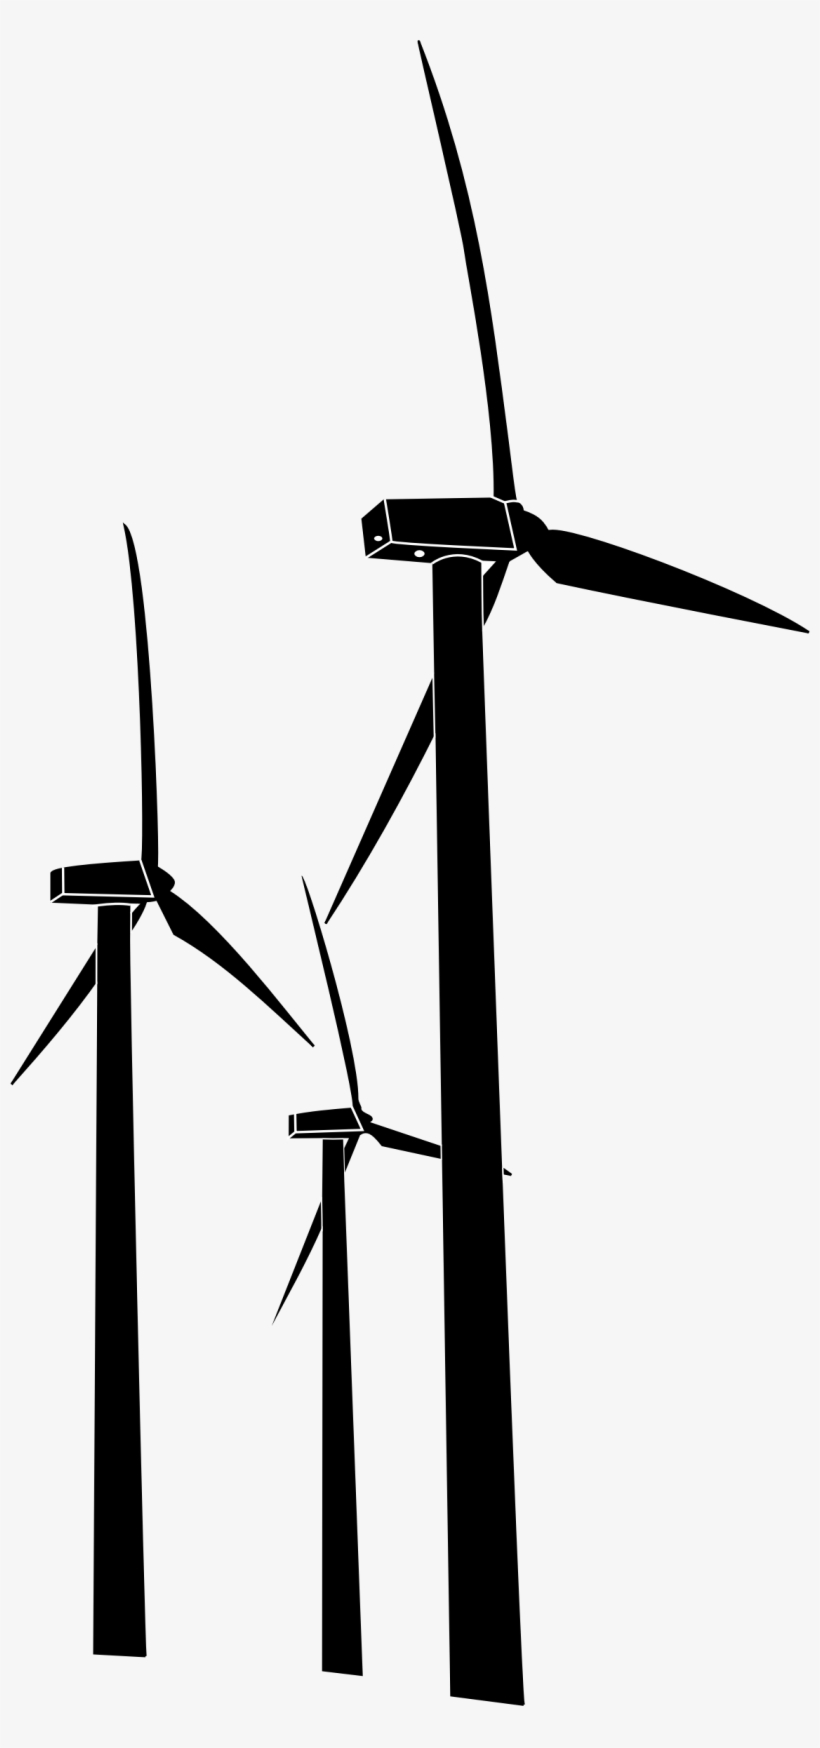 Turbine Clipart Windmill - Wind Turbine Silhouette Png, transparent png #1105326